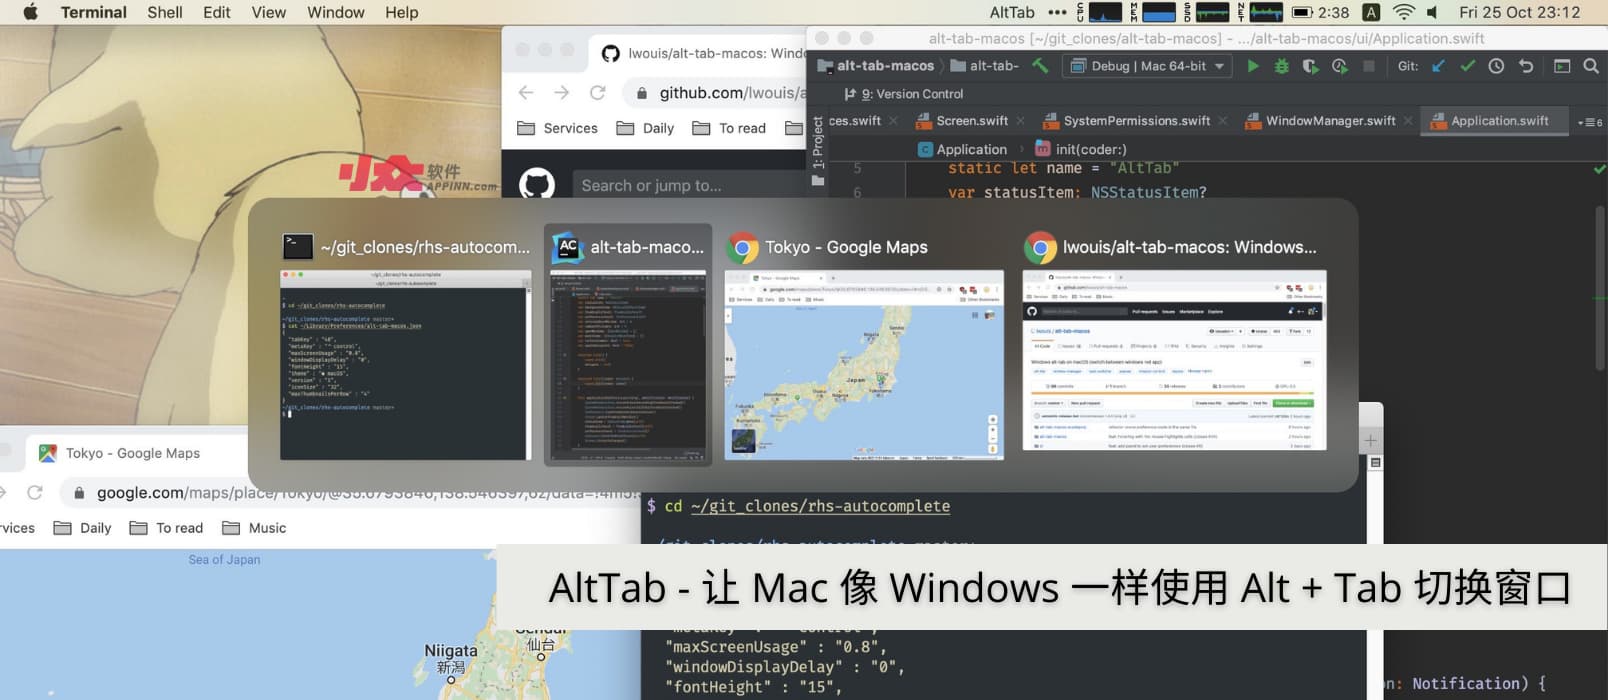 AltTab - 让 Mac 像 Windows 一样使用 Alt + Tab 切换窗口